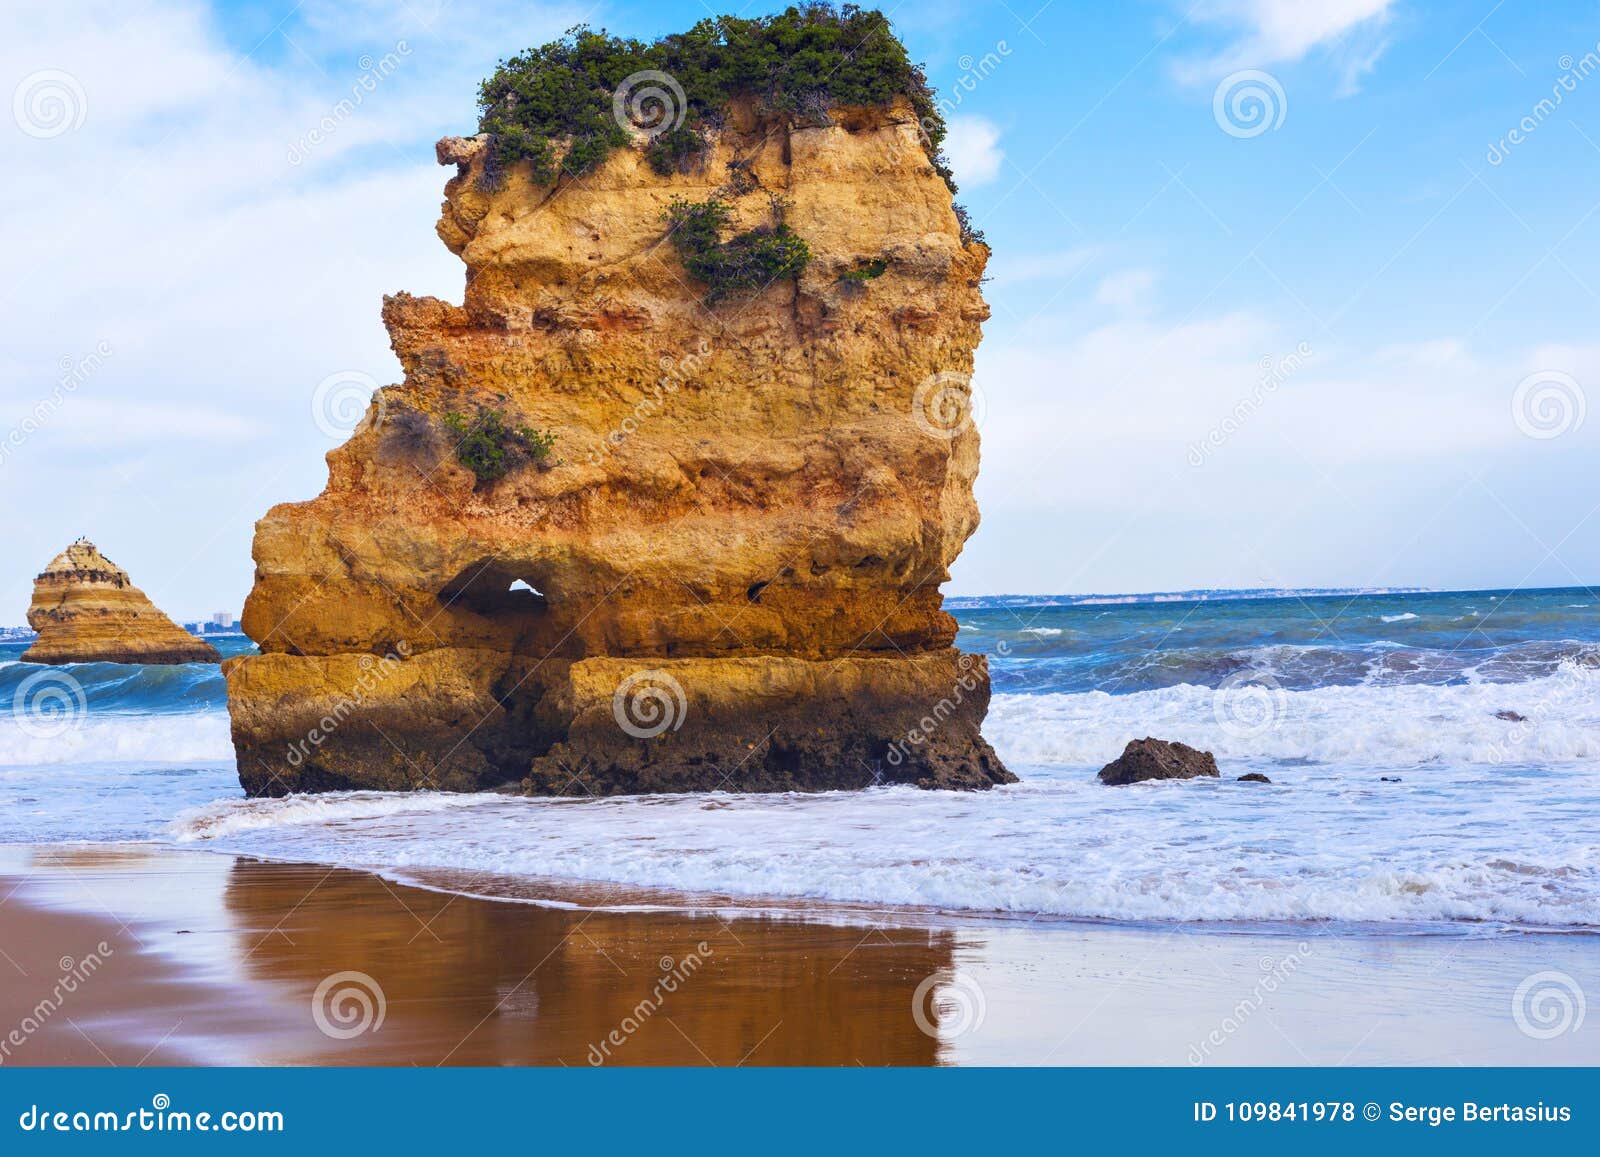 rocky cliff of praia dona ana at lagos, portugal